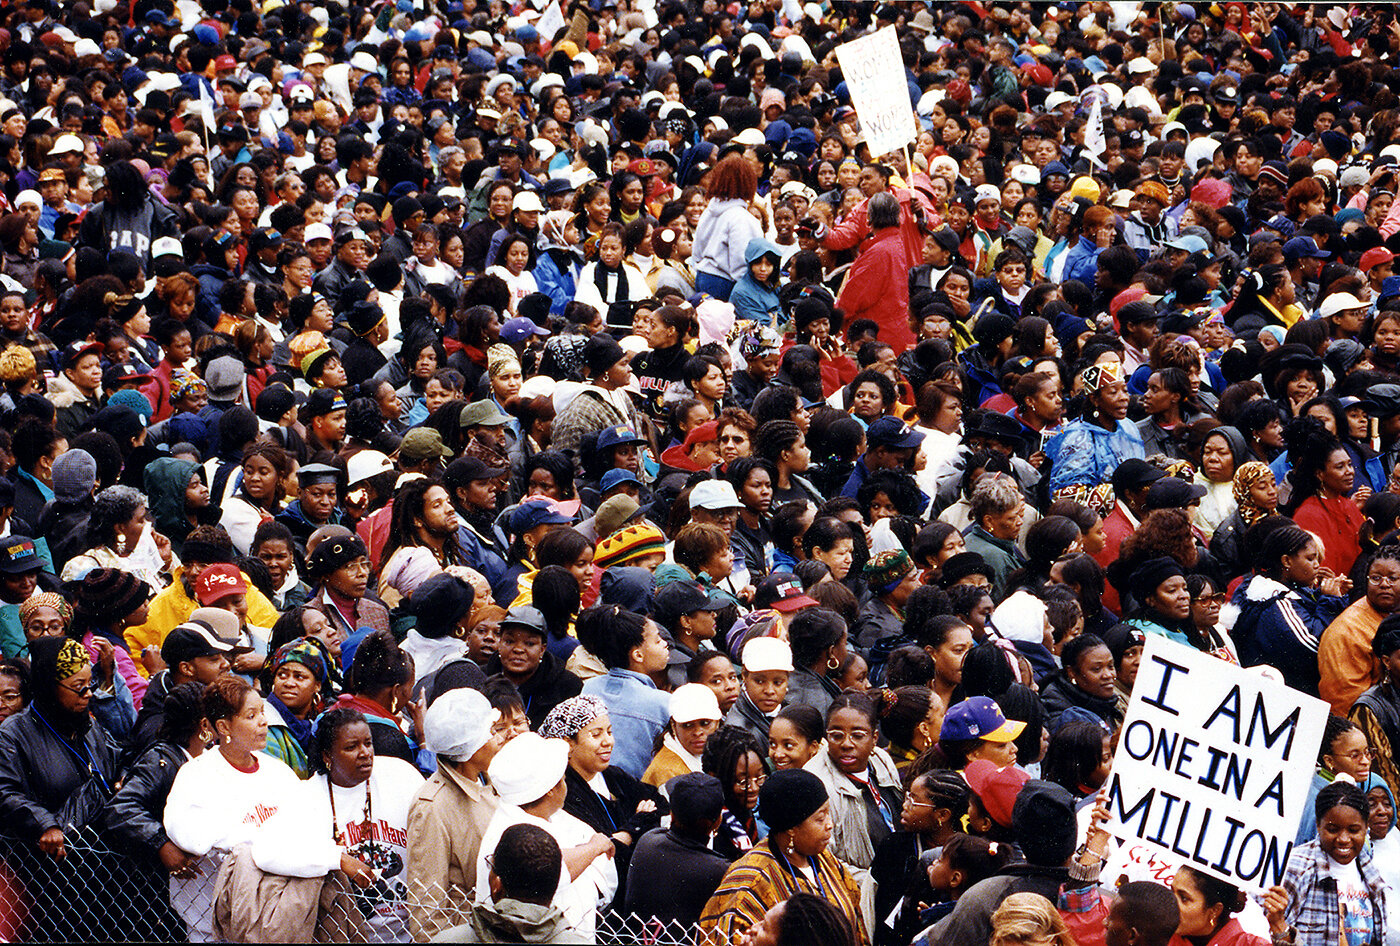 Million Woman March, Philadelphia, PA, October 25, 1997